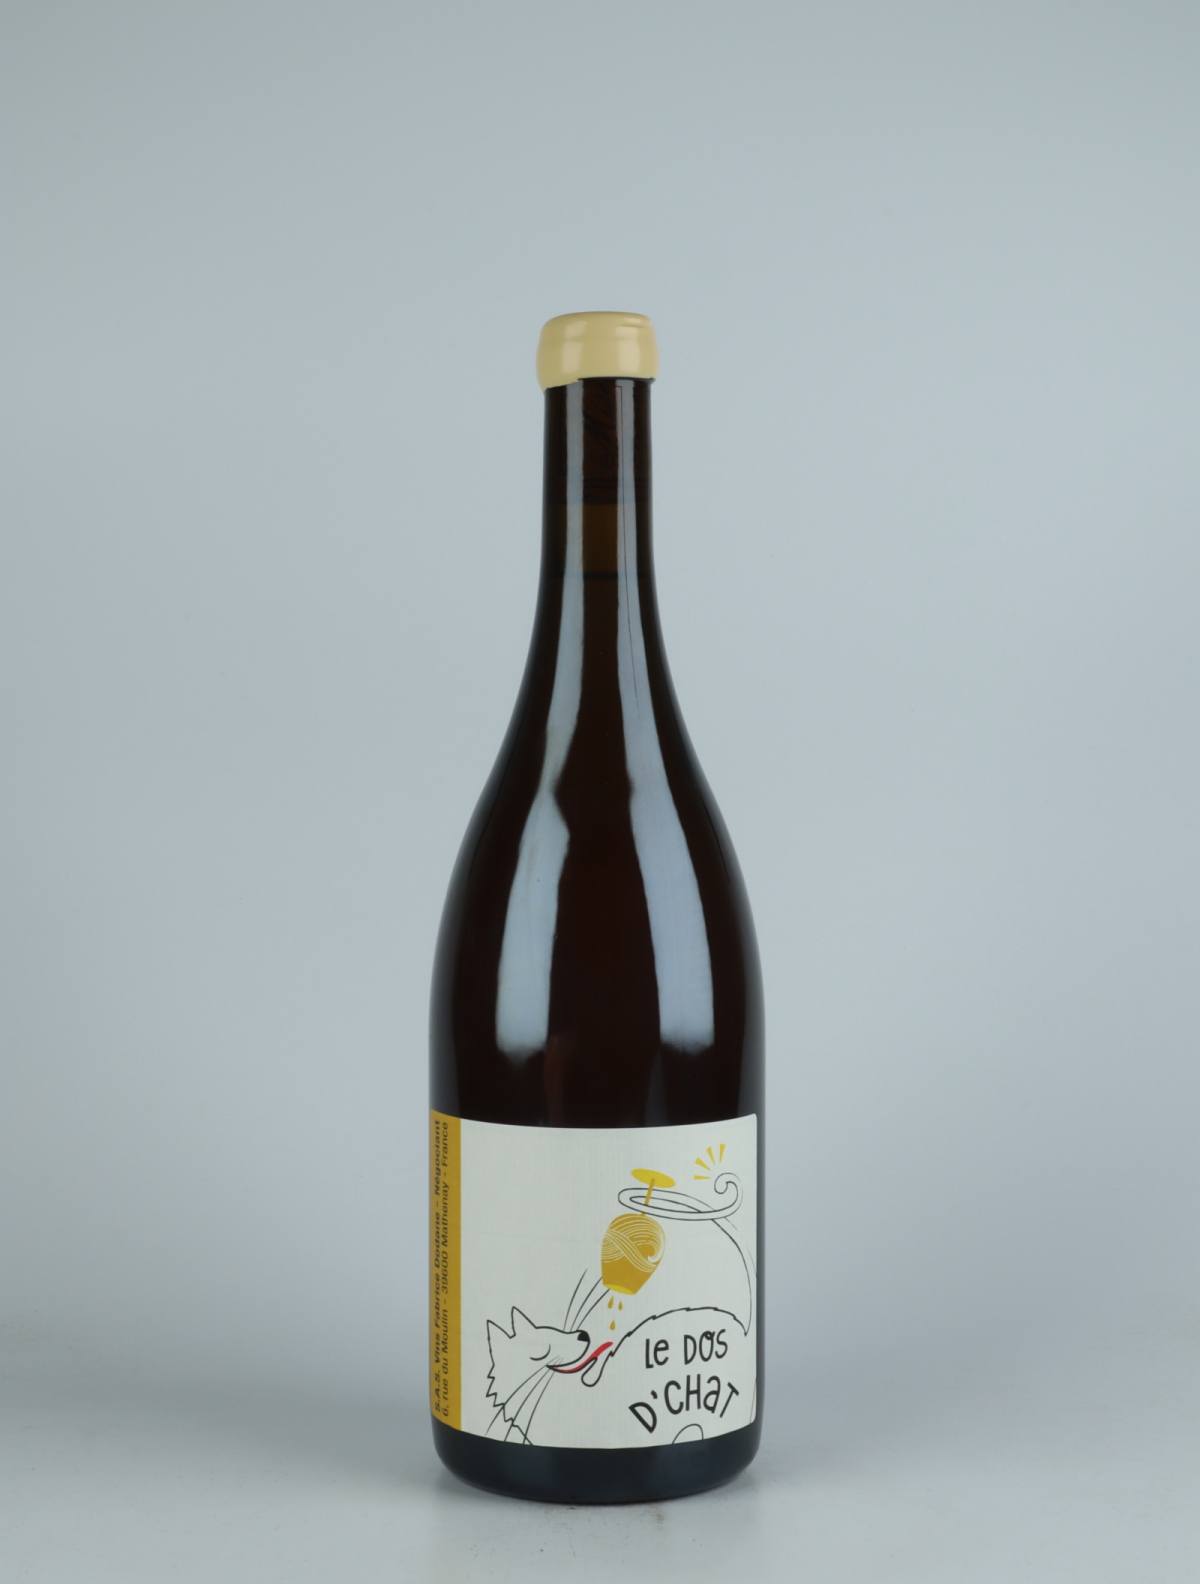 A bottle 2020 Chardonnay Les Corvées White wine from Fabrice Dodane, Jura in France